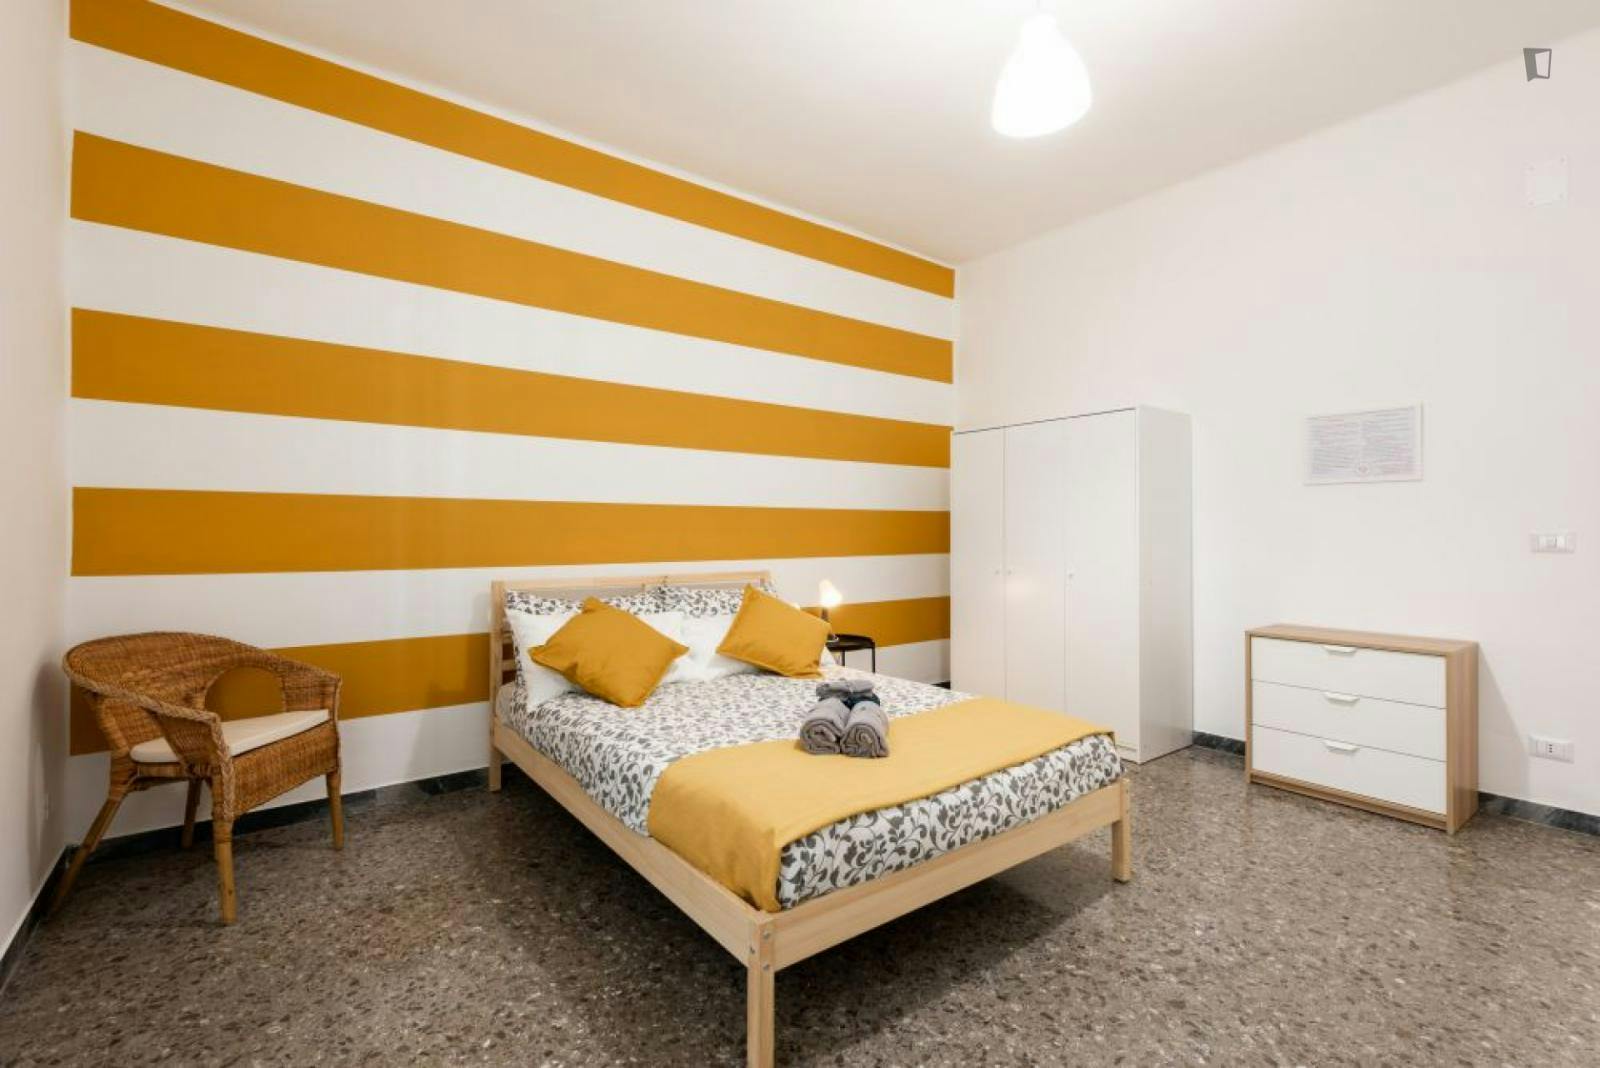 Nice double bedroom in a 4-bedroom apartment near Bari F. Crispi metro station